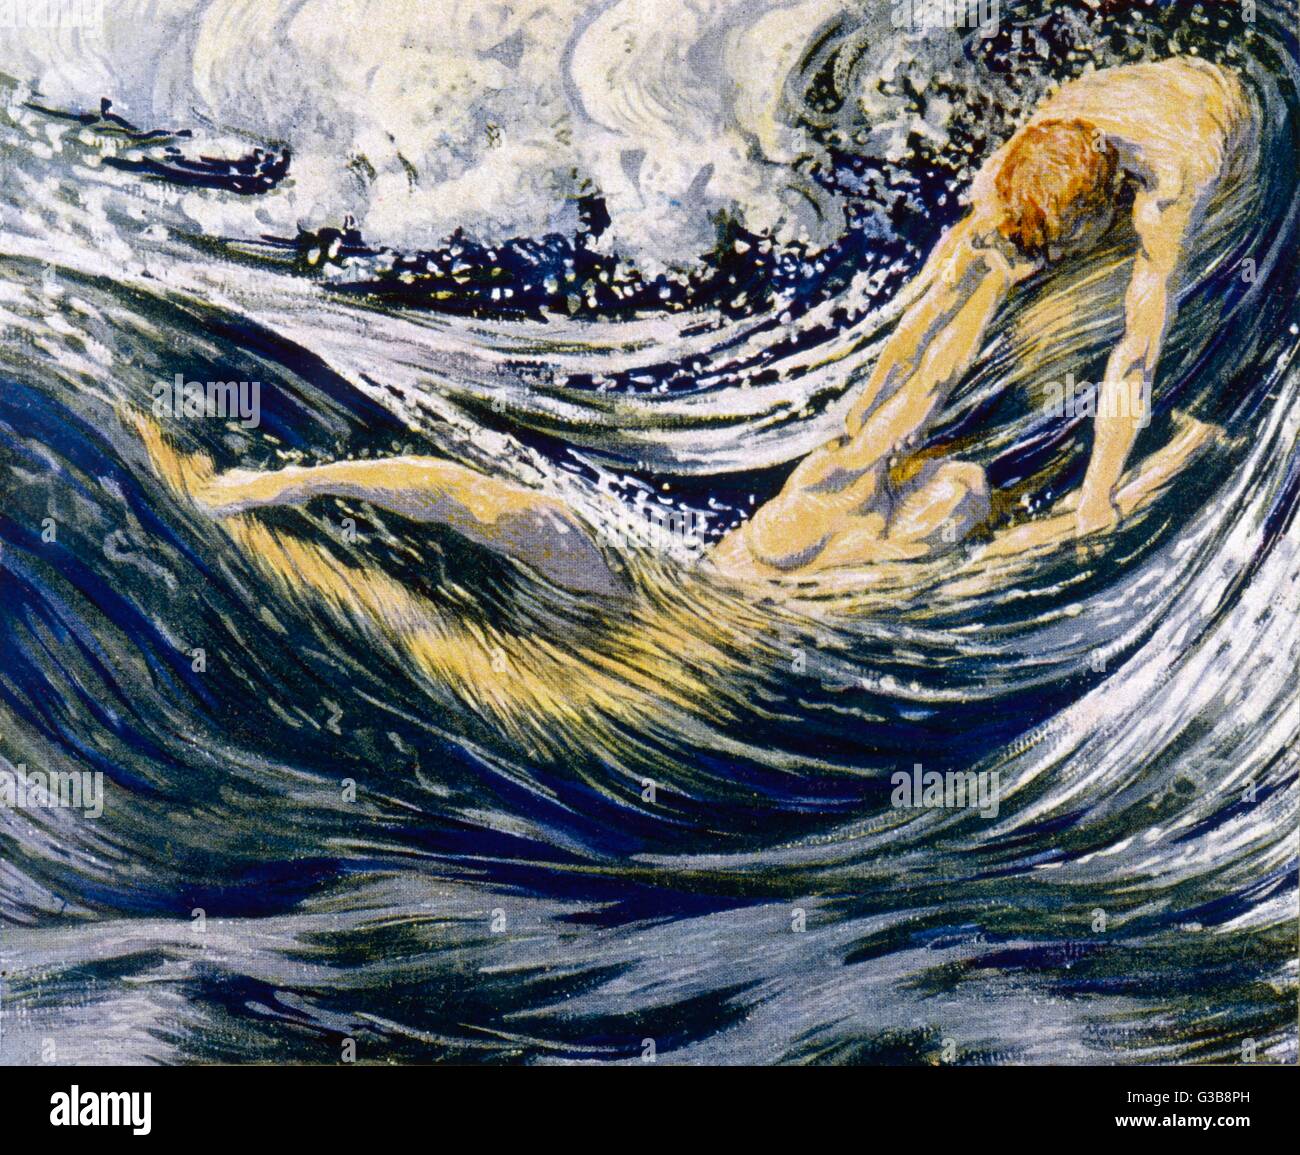 2 AMONG THE WAVES, 1913 Stock Photo